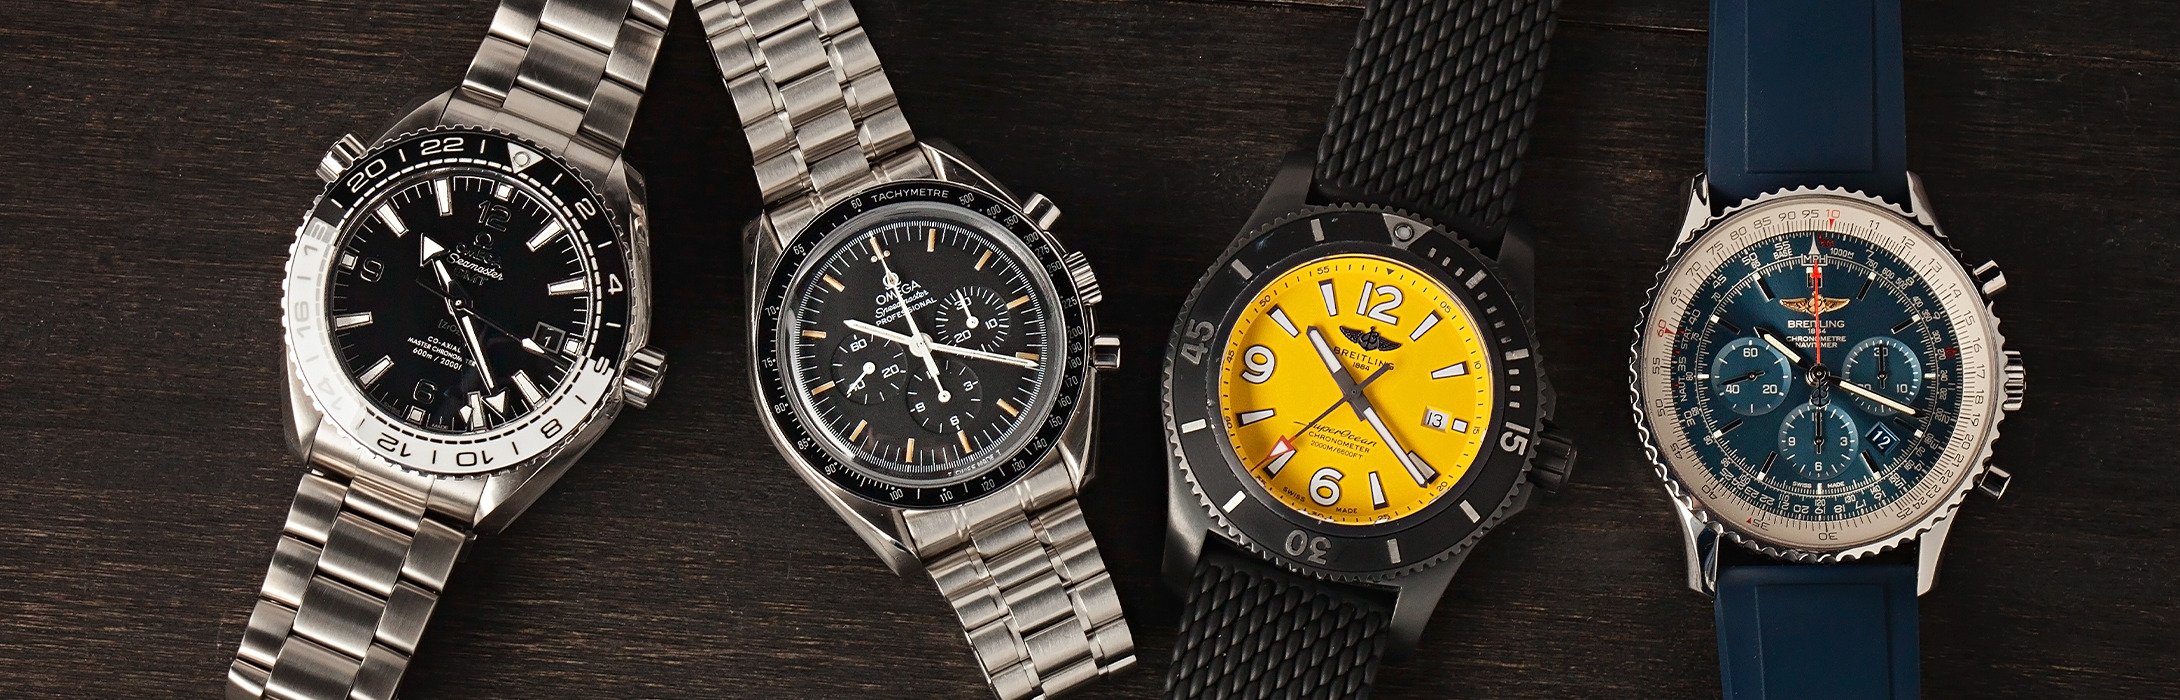 Breitling vs. Omega - Full Brand Comparison - Bob's Watches